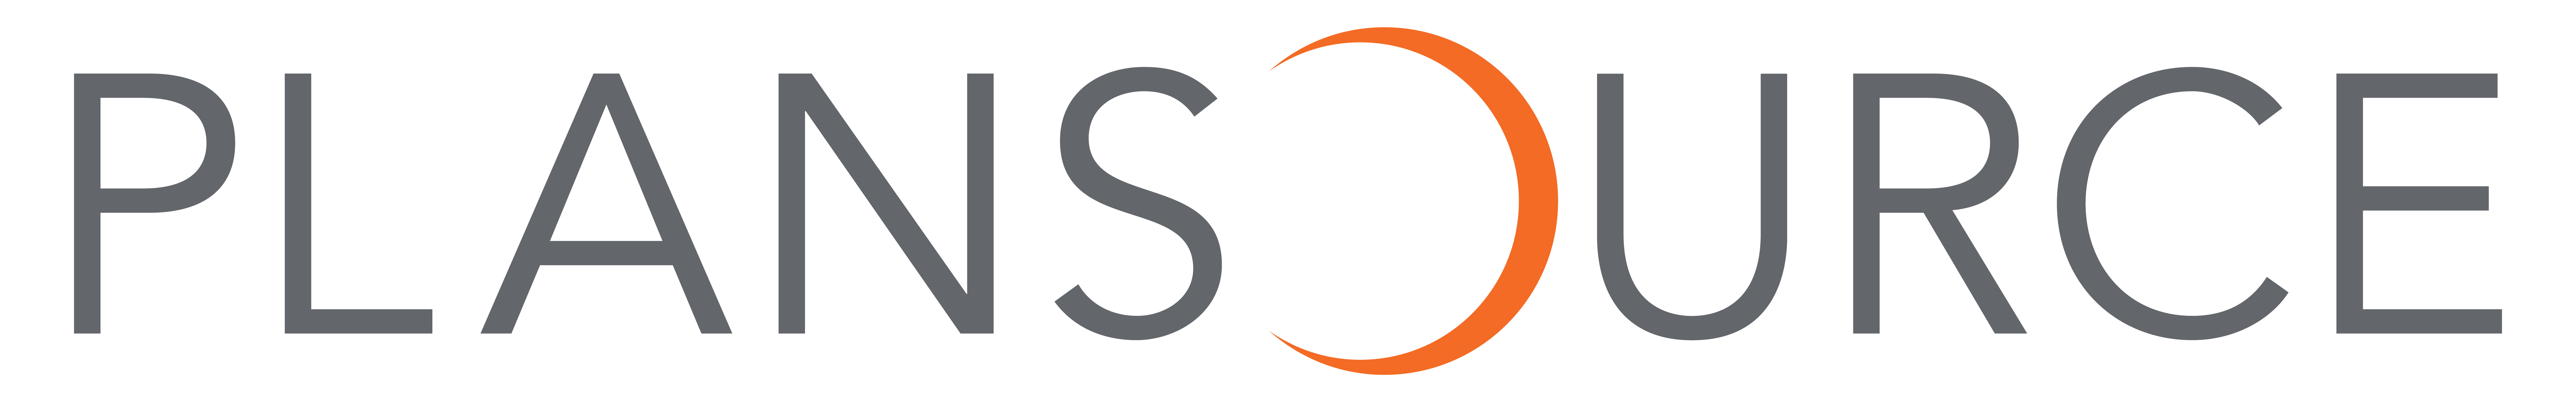 plansource logo